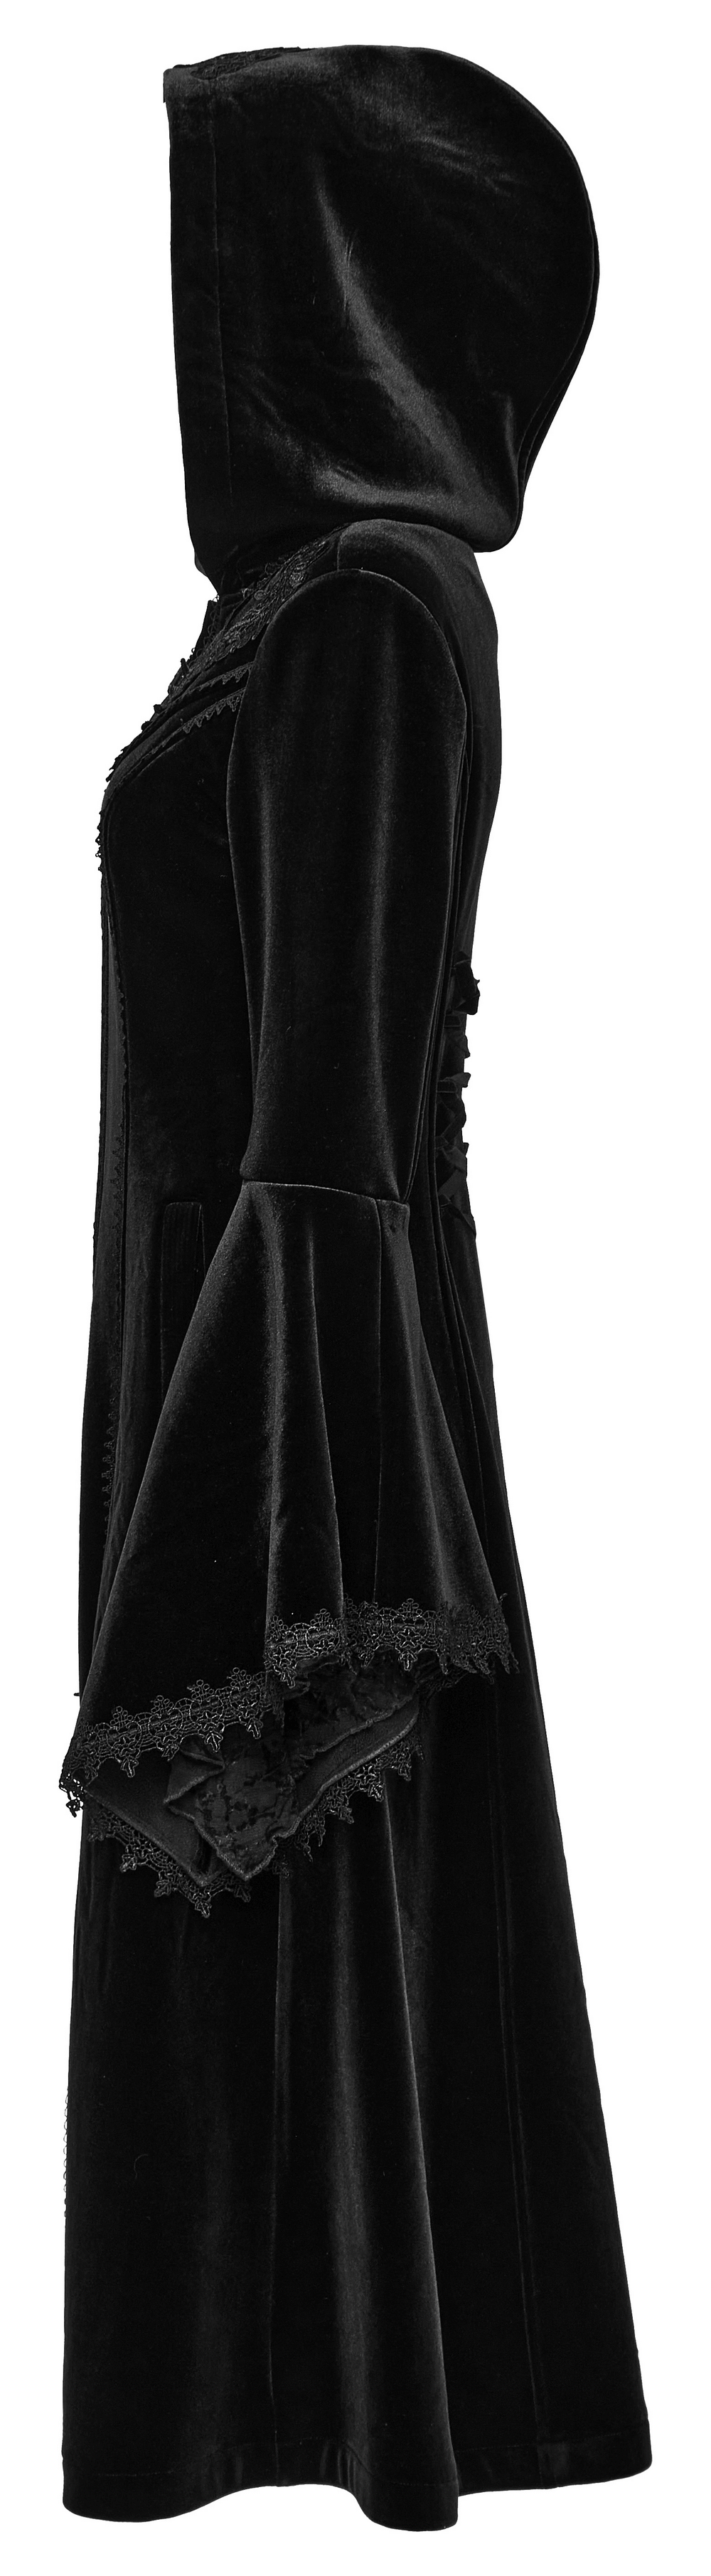 Luxurious Hooded Velvet Coat with Gothic Flair - HARD'N'HEAVY